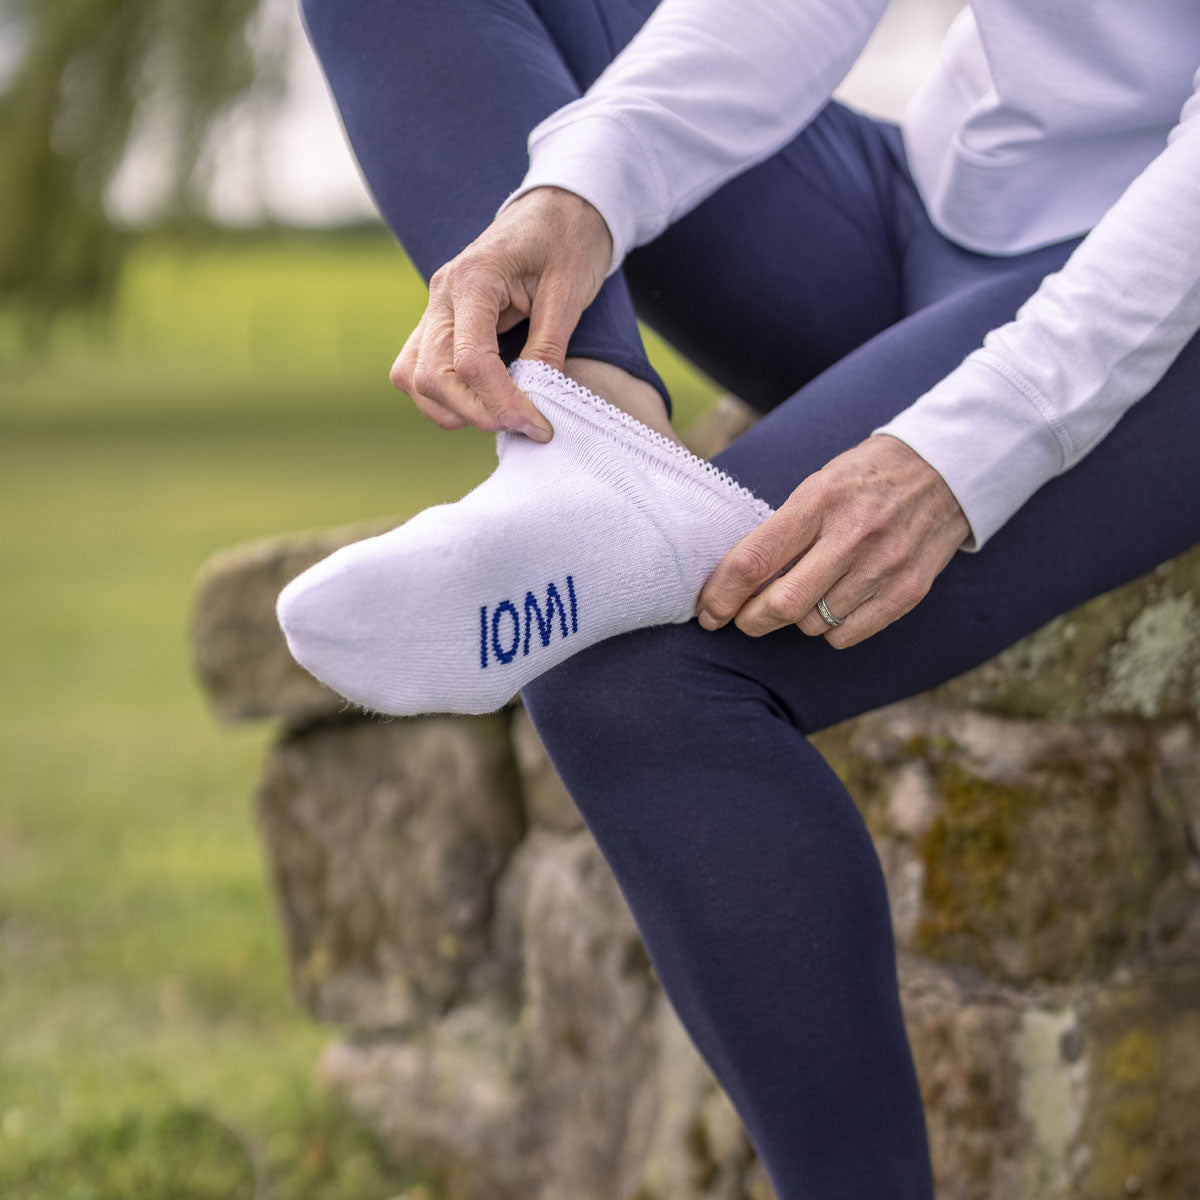 3 Pairs IOMI FootNurse Cushion Foot Diabetic Trainer Socks - White